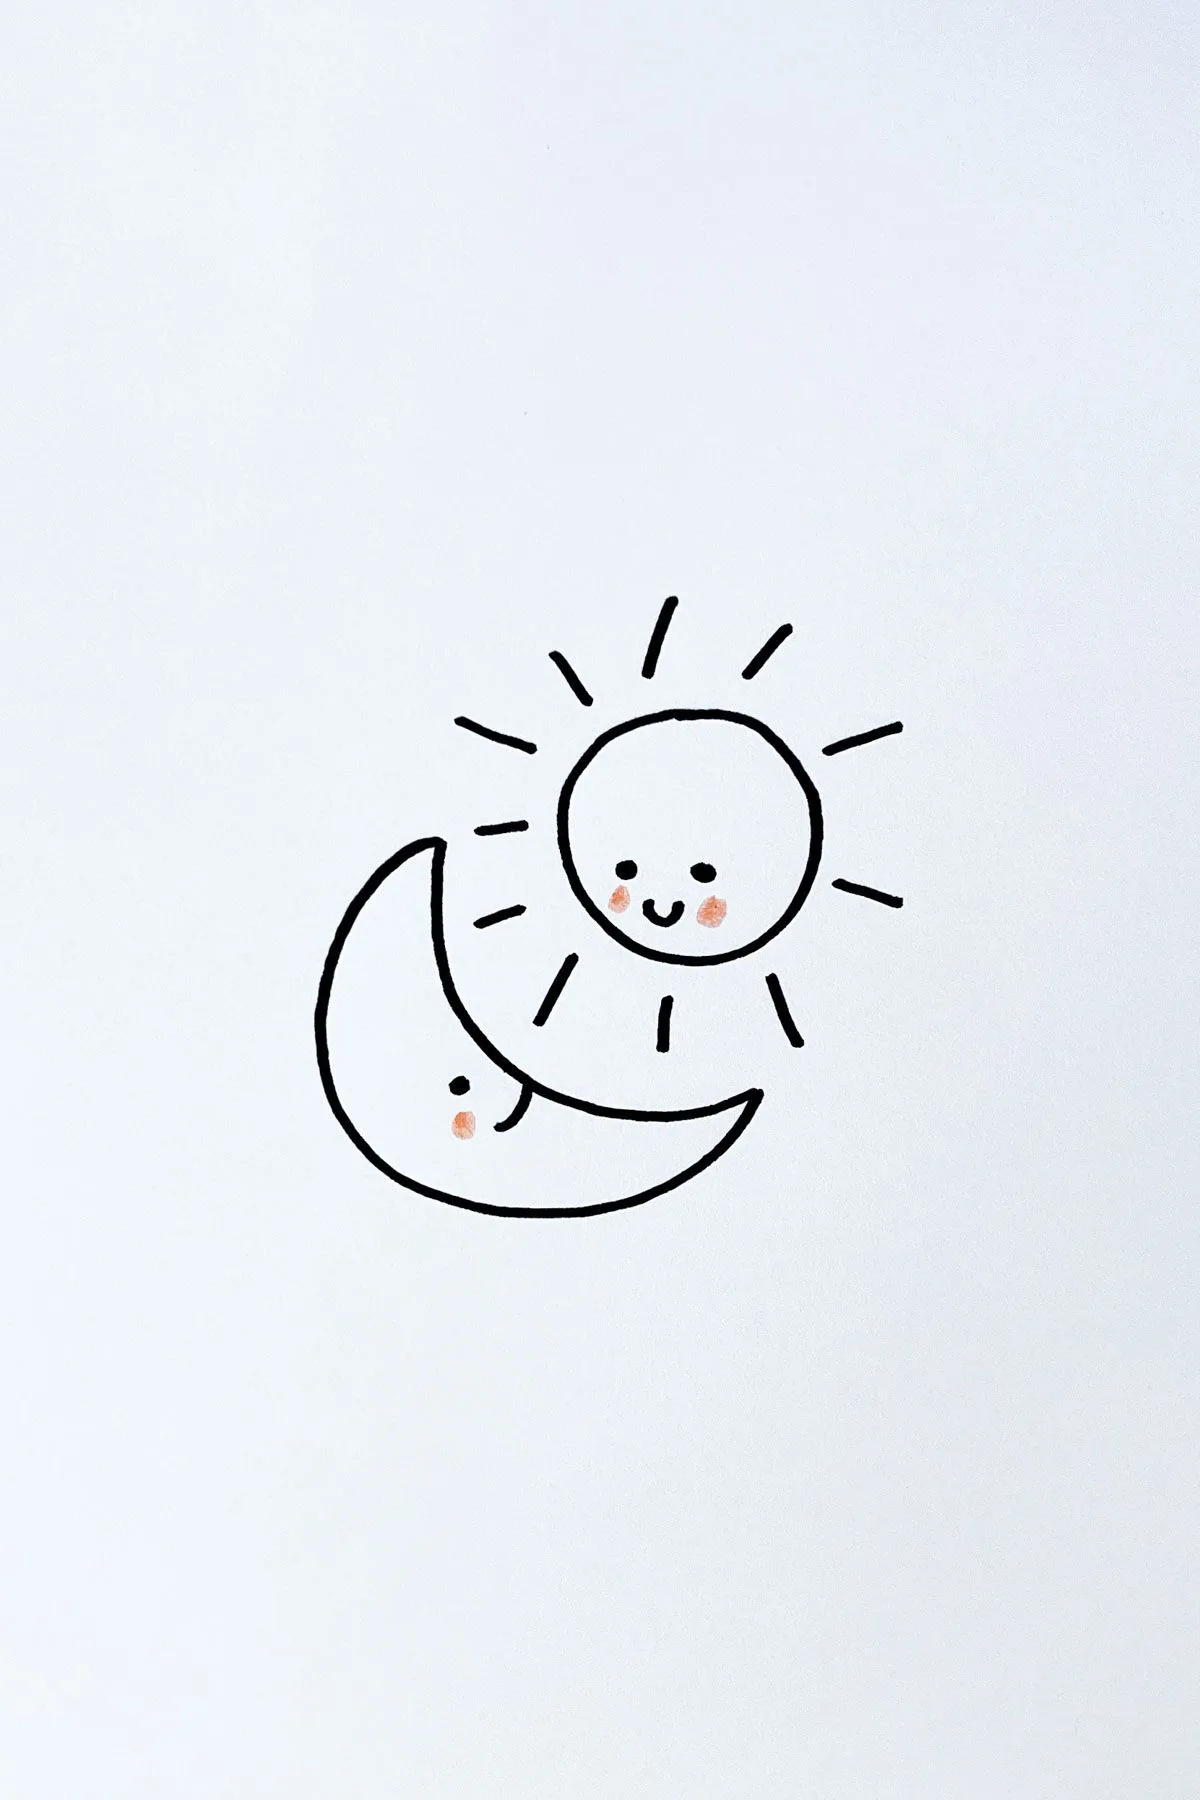 blushing sun and moon drawing